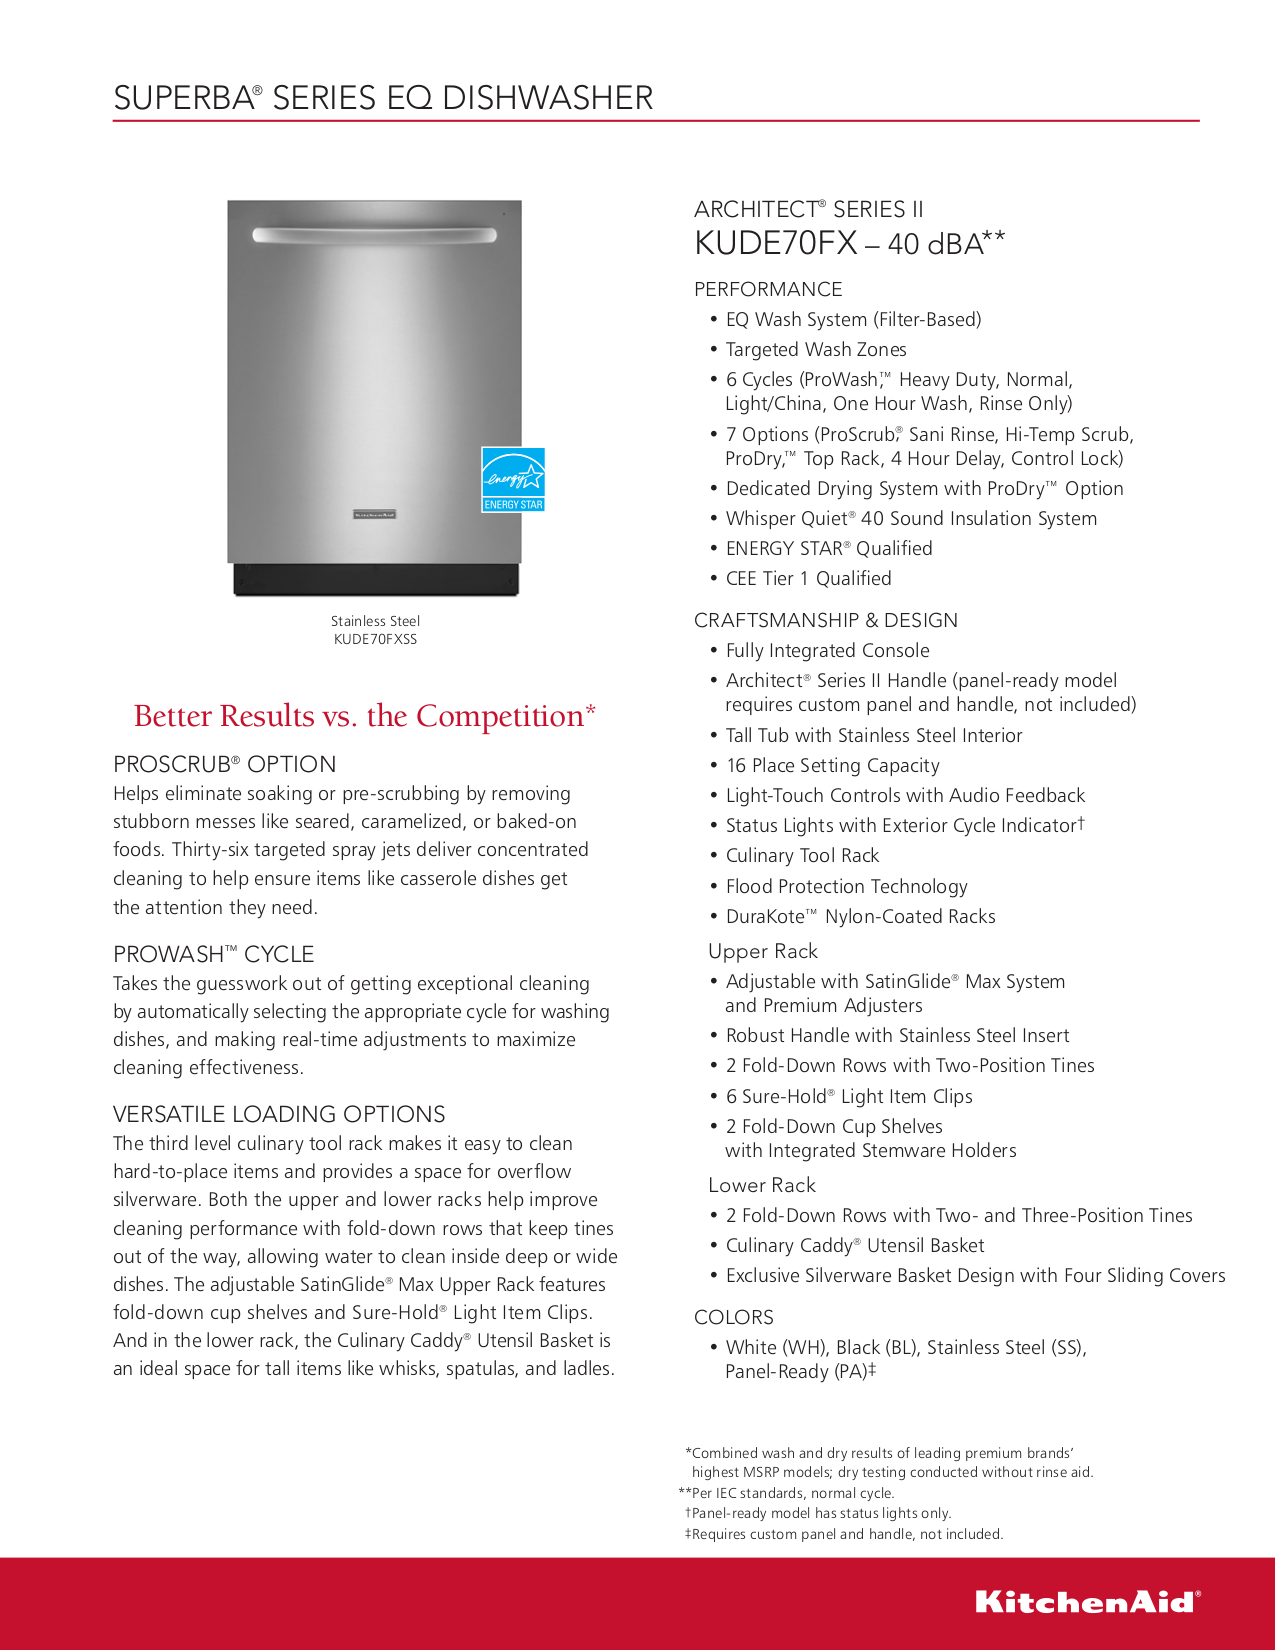 Kitchenaid dishwasher manual pdf